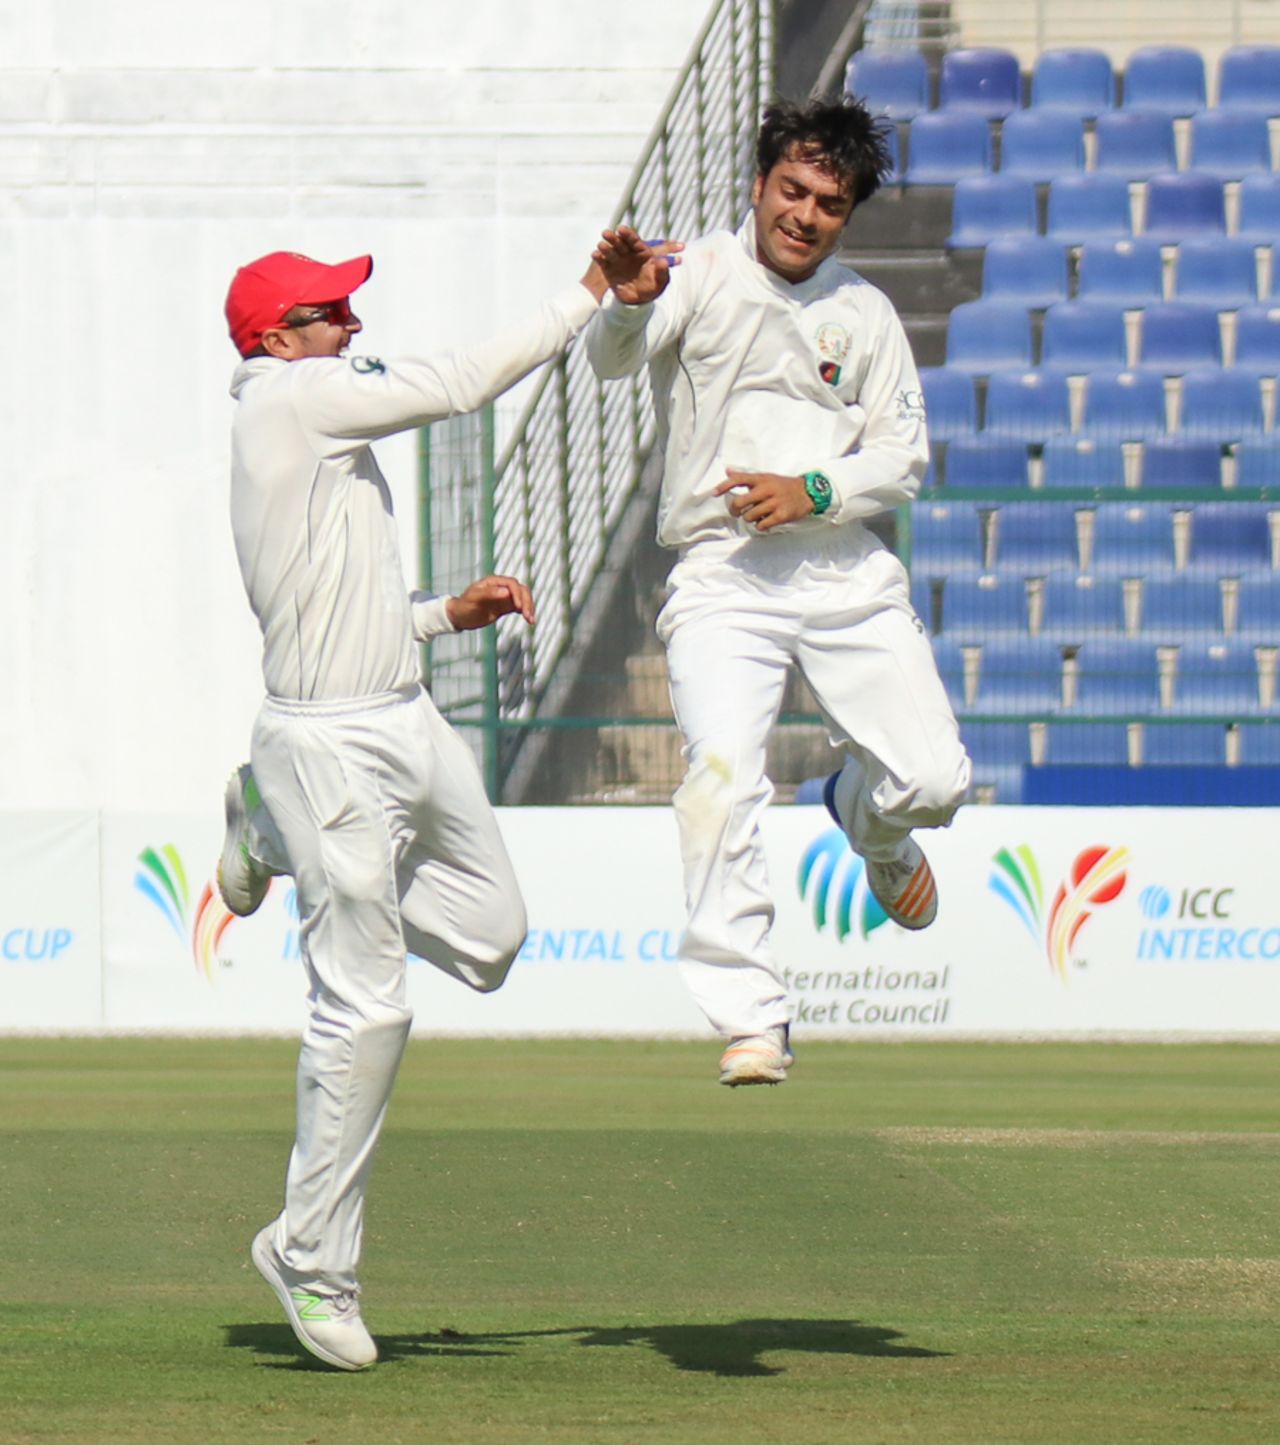 Rashid Khan high fives Nasir Jamal after another wicket, UAE v Afghanistan, 2015-17 Intercontinental Cup, 4th day, Abu Dhabi, December 2, 2017